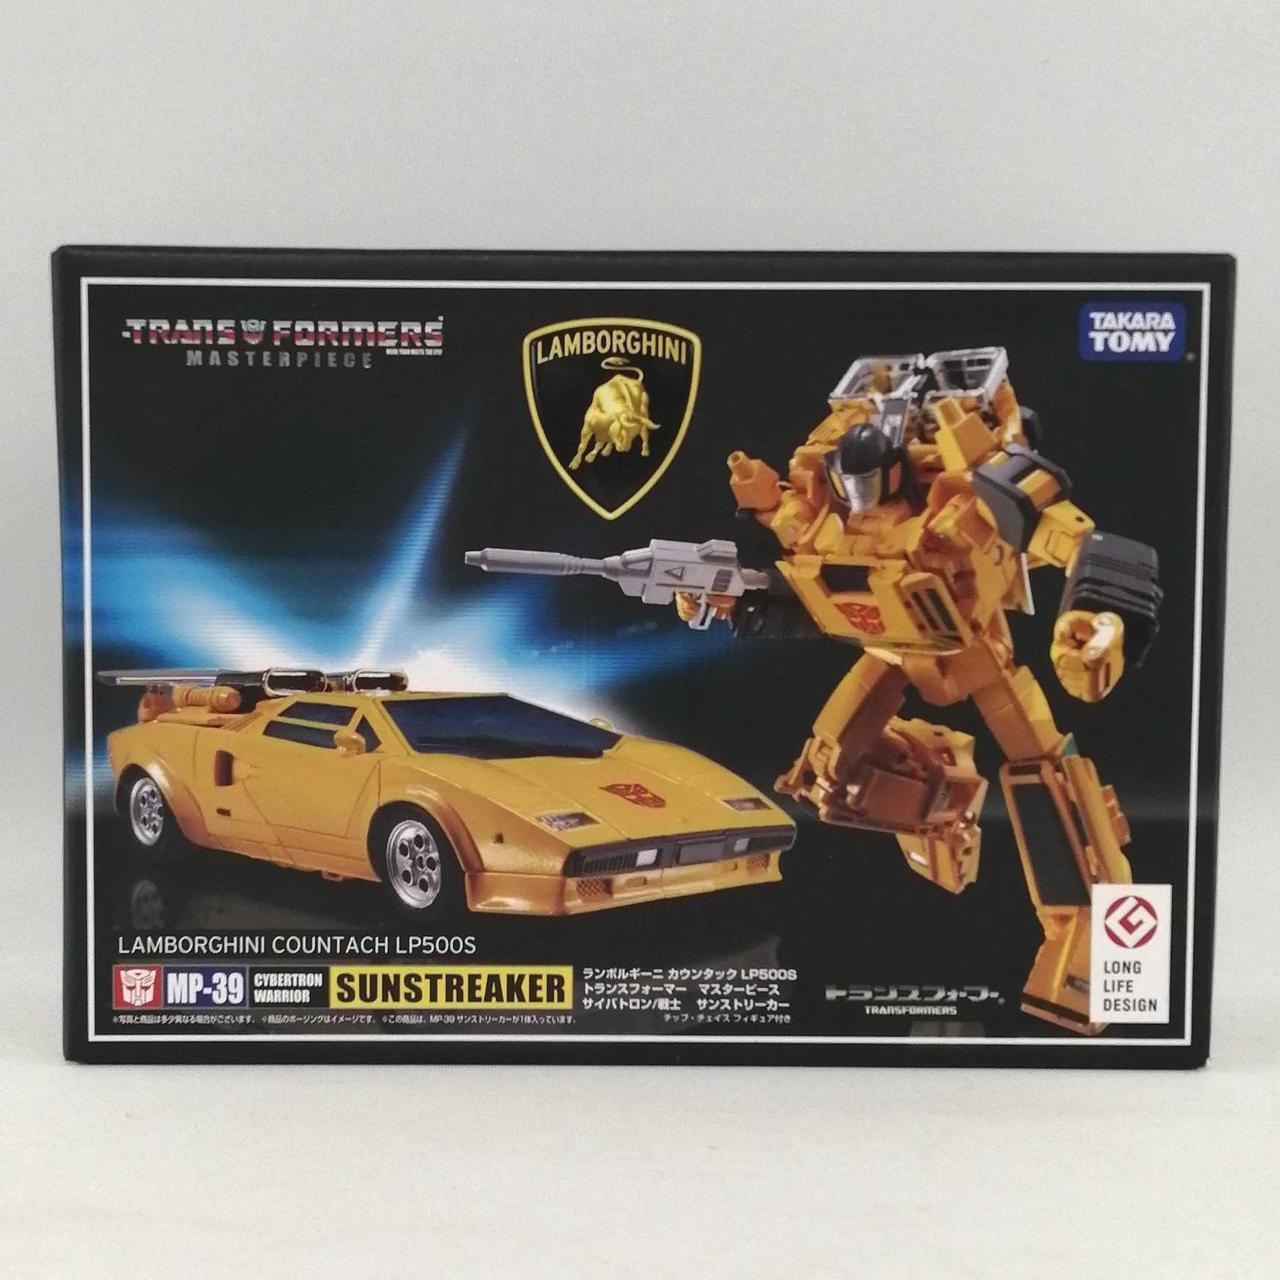 Takara Tomy Transformers Masterpiece MP-39 Sunstreaker Action Figure Toy